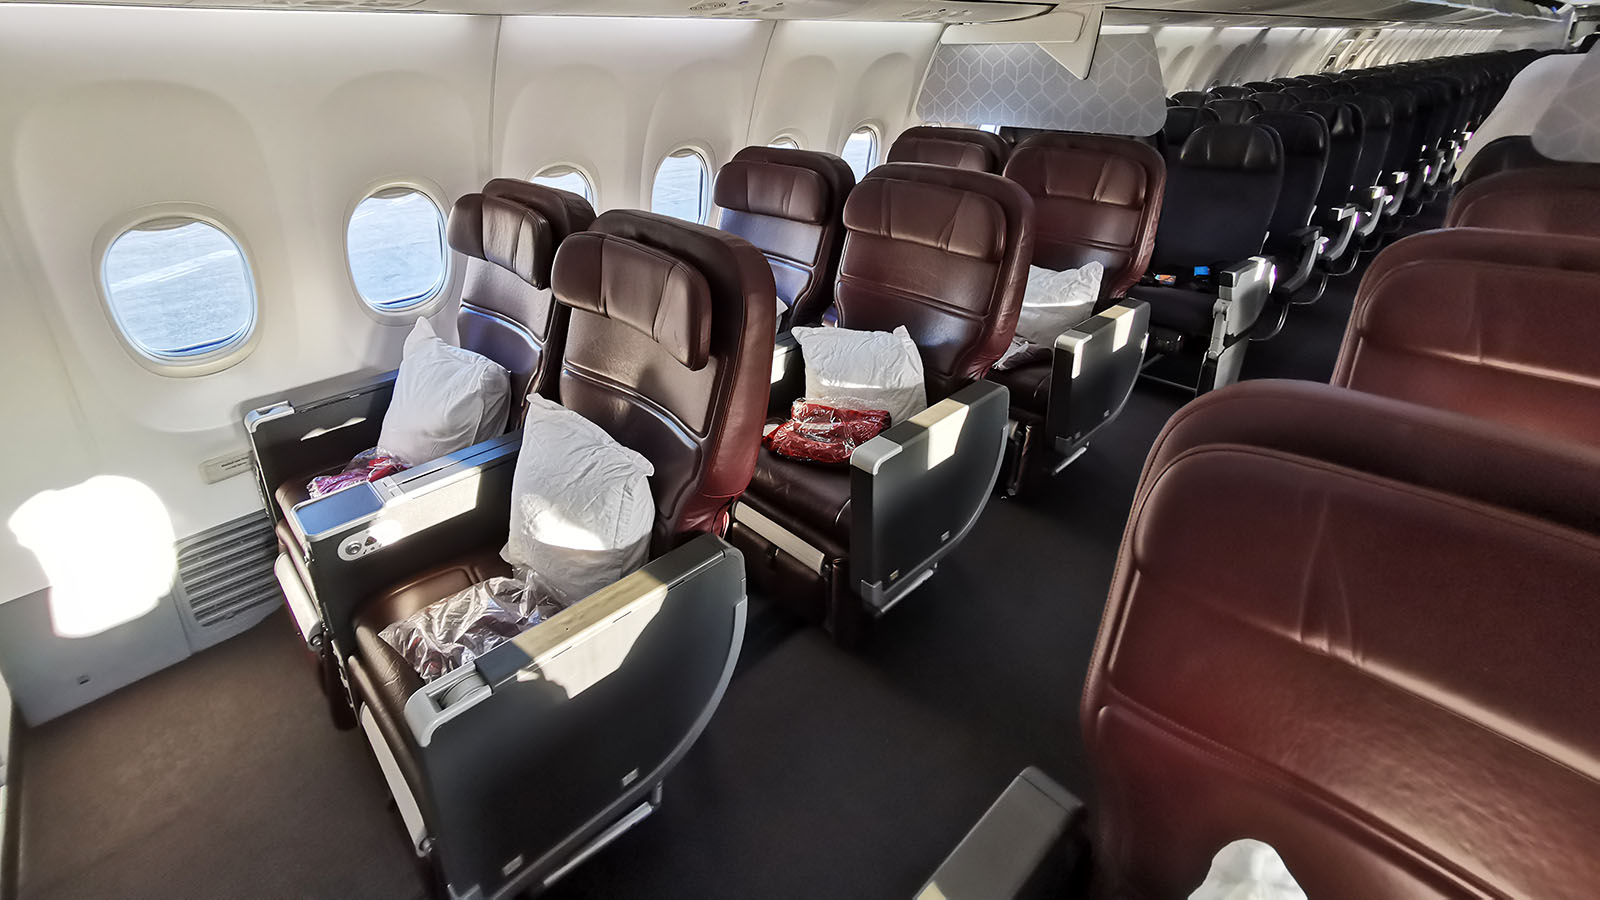 Qantas Boeing 737 Business Class cabin